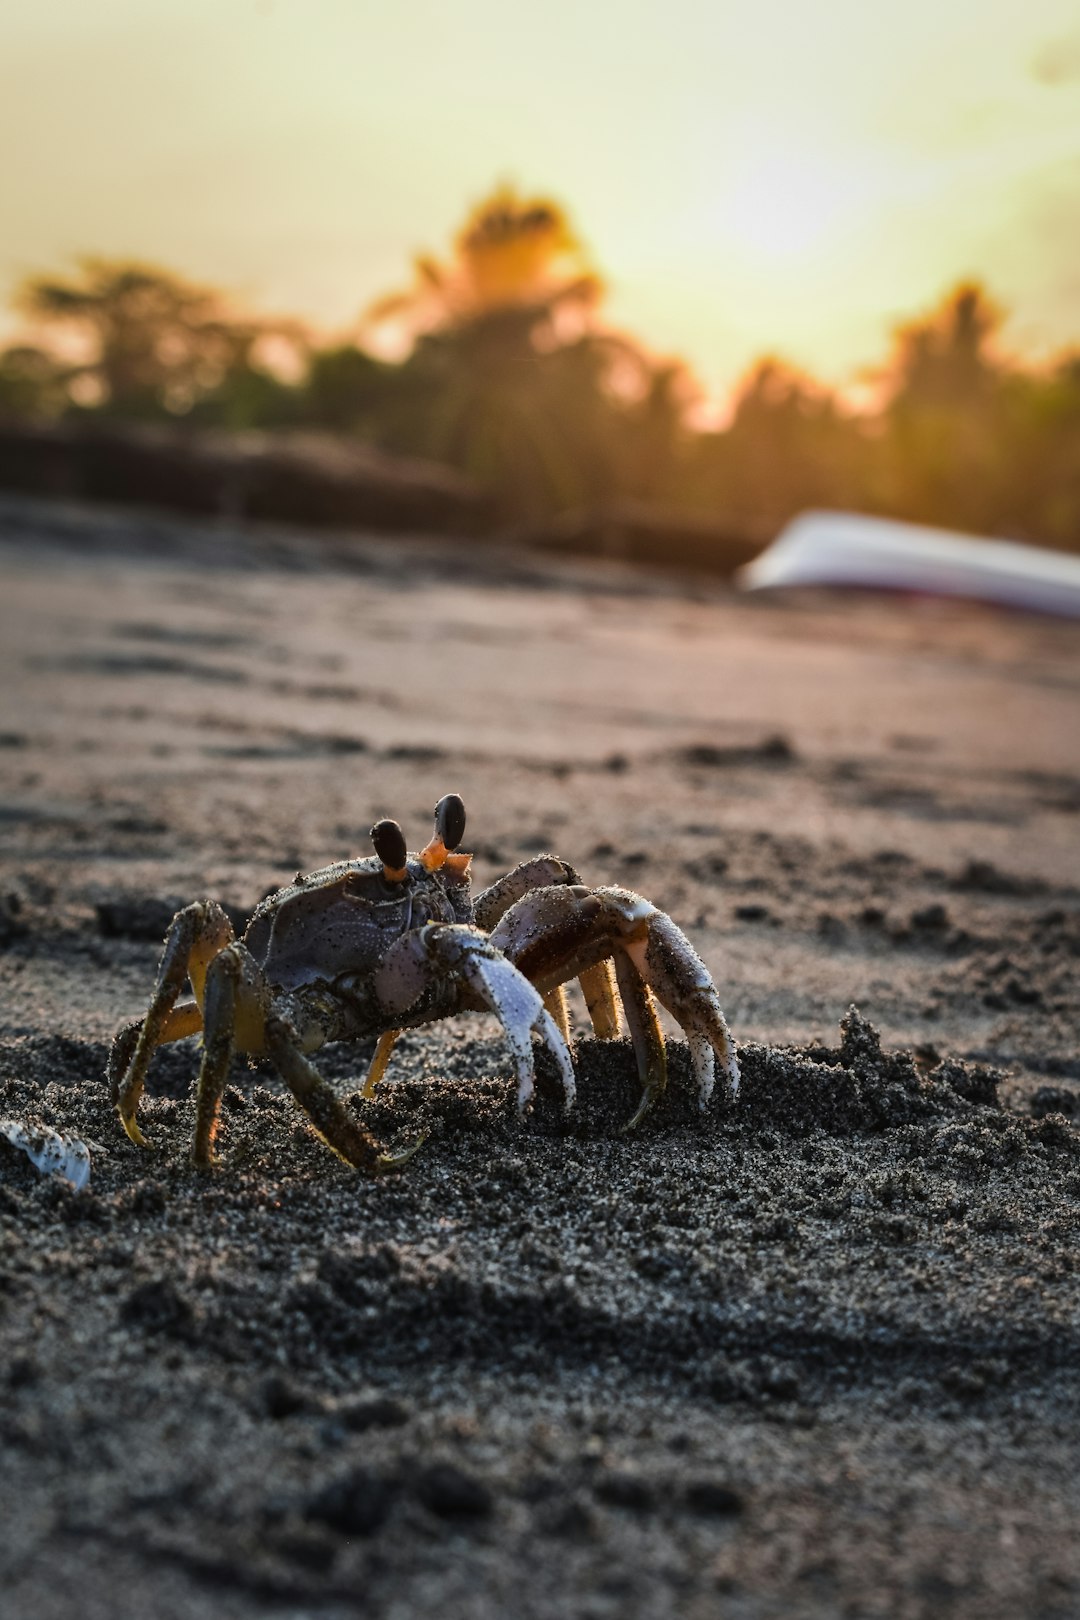  crab on sand near trees crab